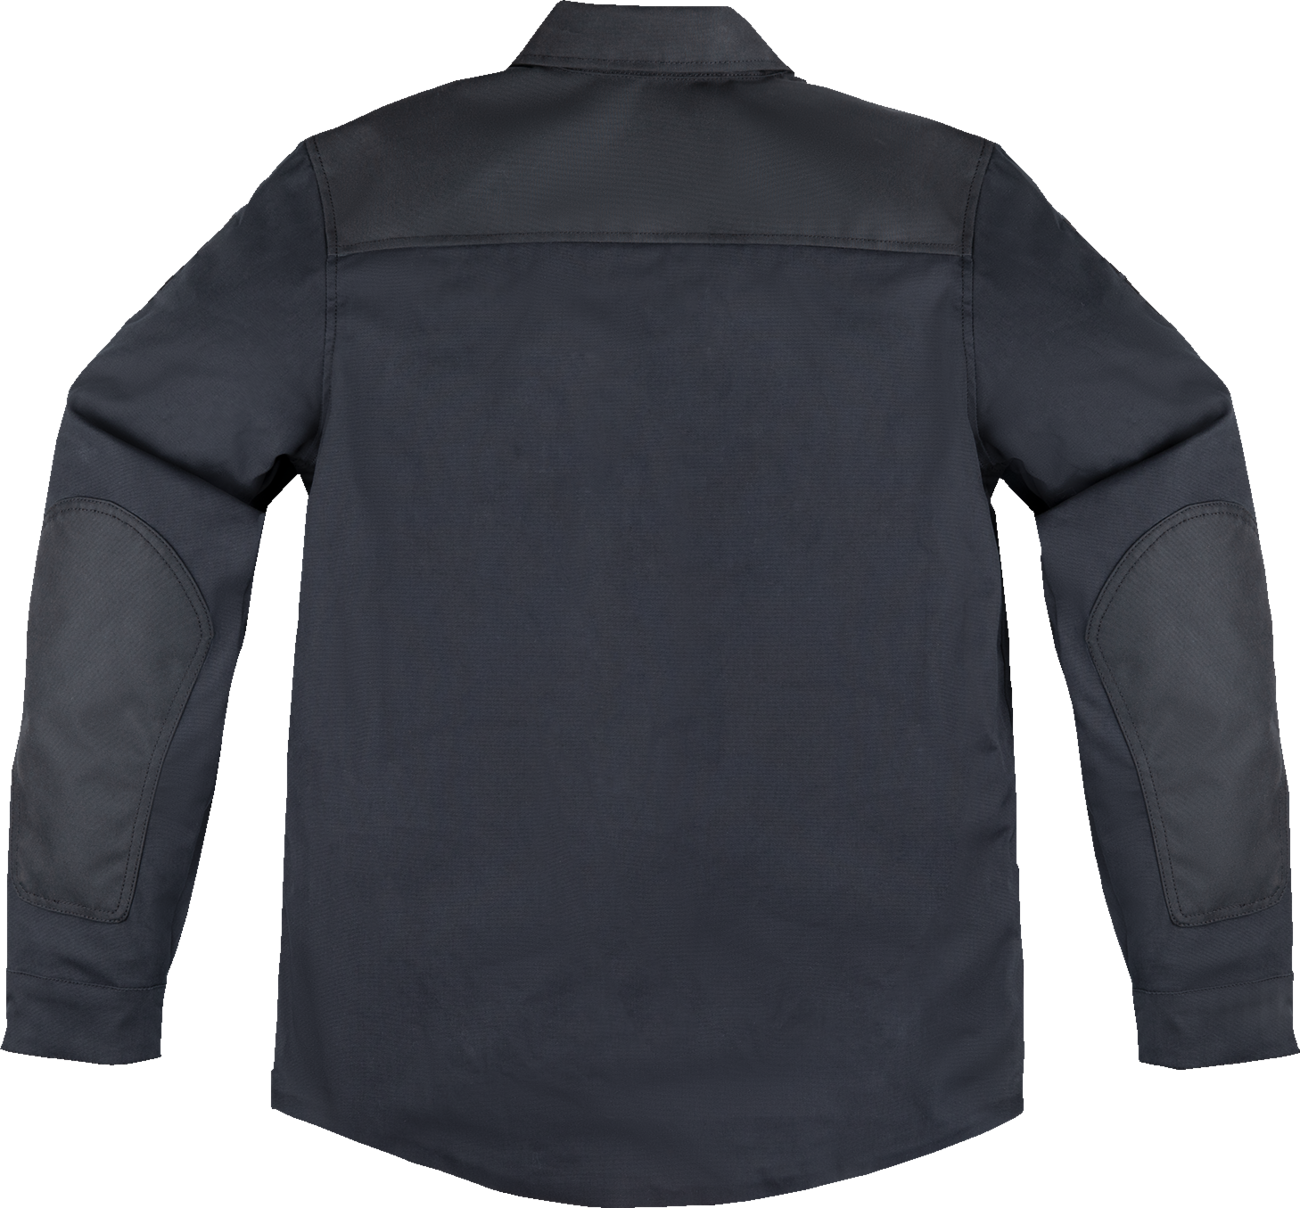 ICON Upstate Canvas National Jacket - Black - XL 2820-6563